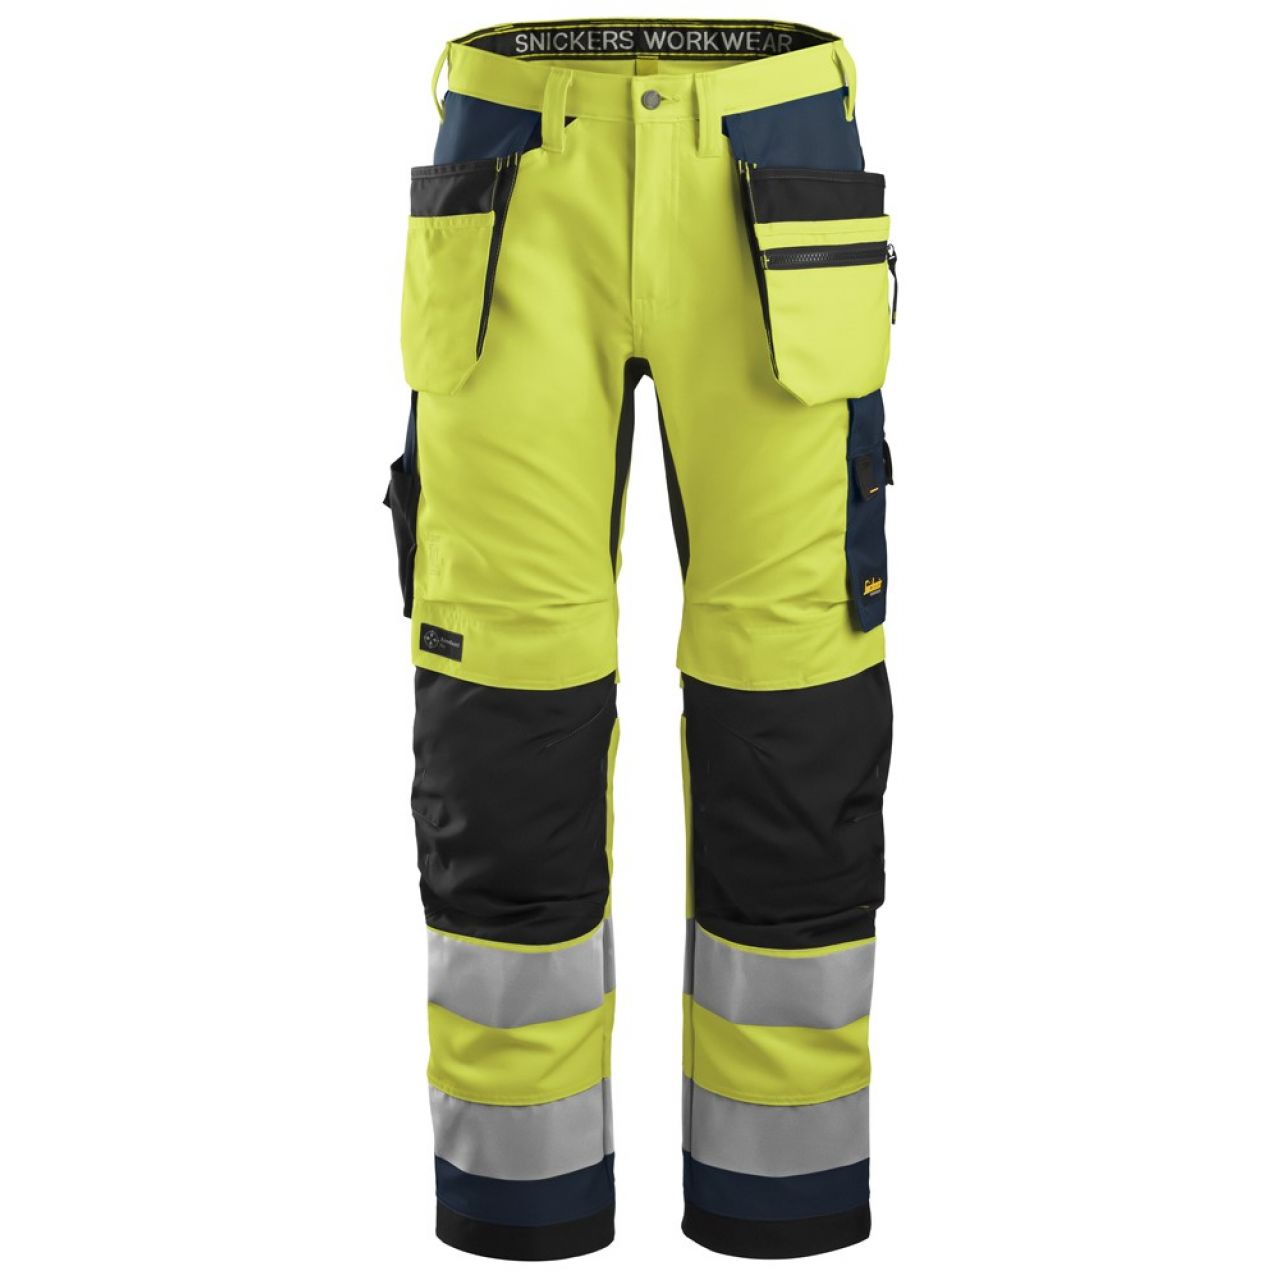 6230 Pantalones largos de trabajo de alta visibilidad clase 2 con bolsillos flotantes AllroundWork amarillo-azul marino talla 100